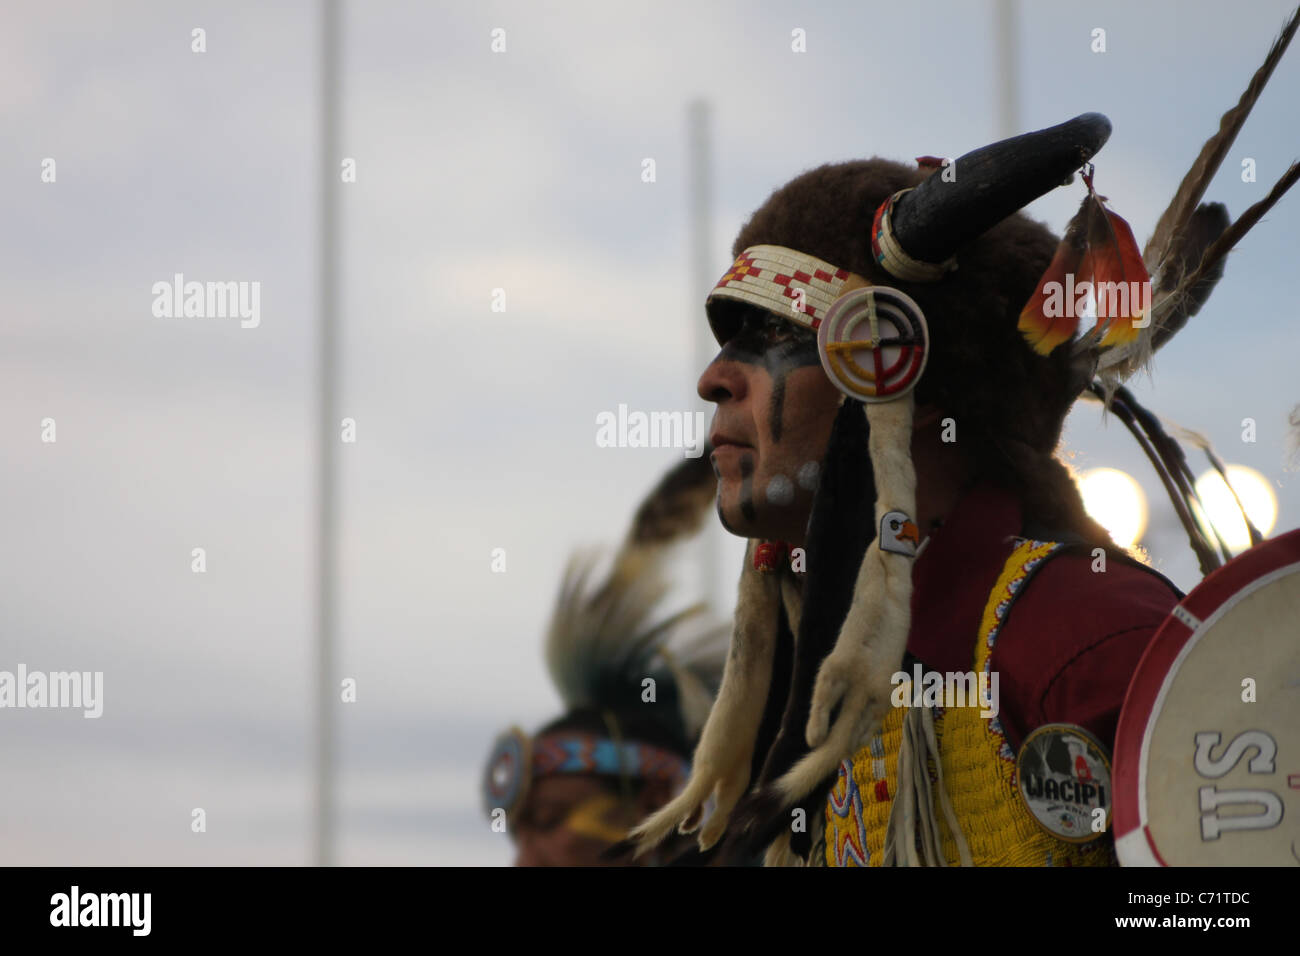 Shakopee Mdewakanton Sioux Gemeinschaft Wacipi Pow Wow, Native American dance Festival - Portrait of Native American dancer Stockfoto